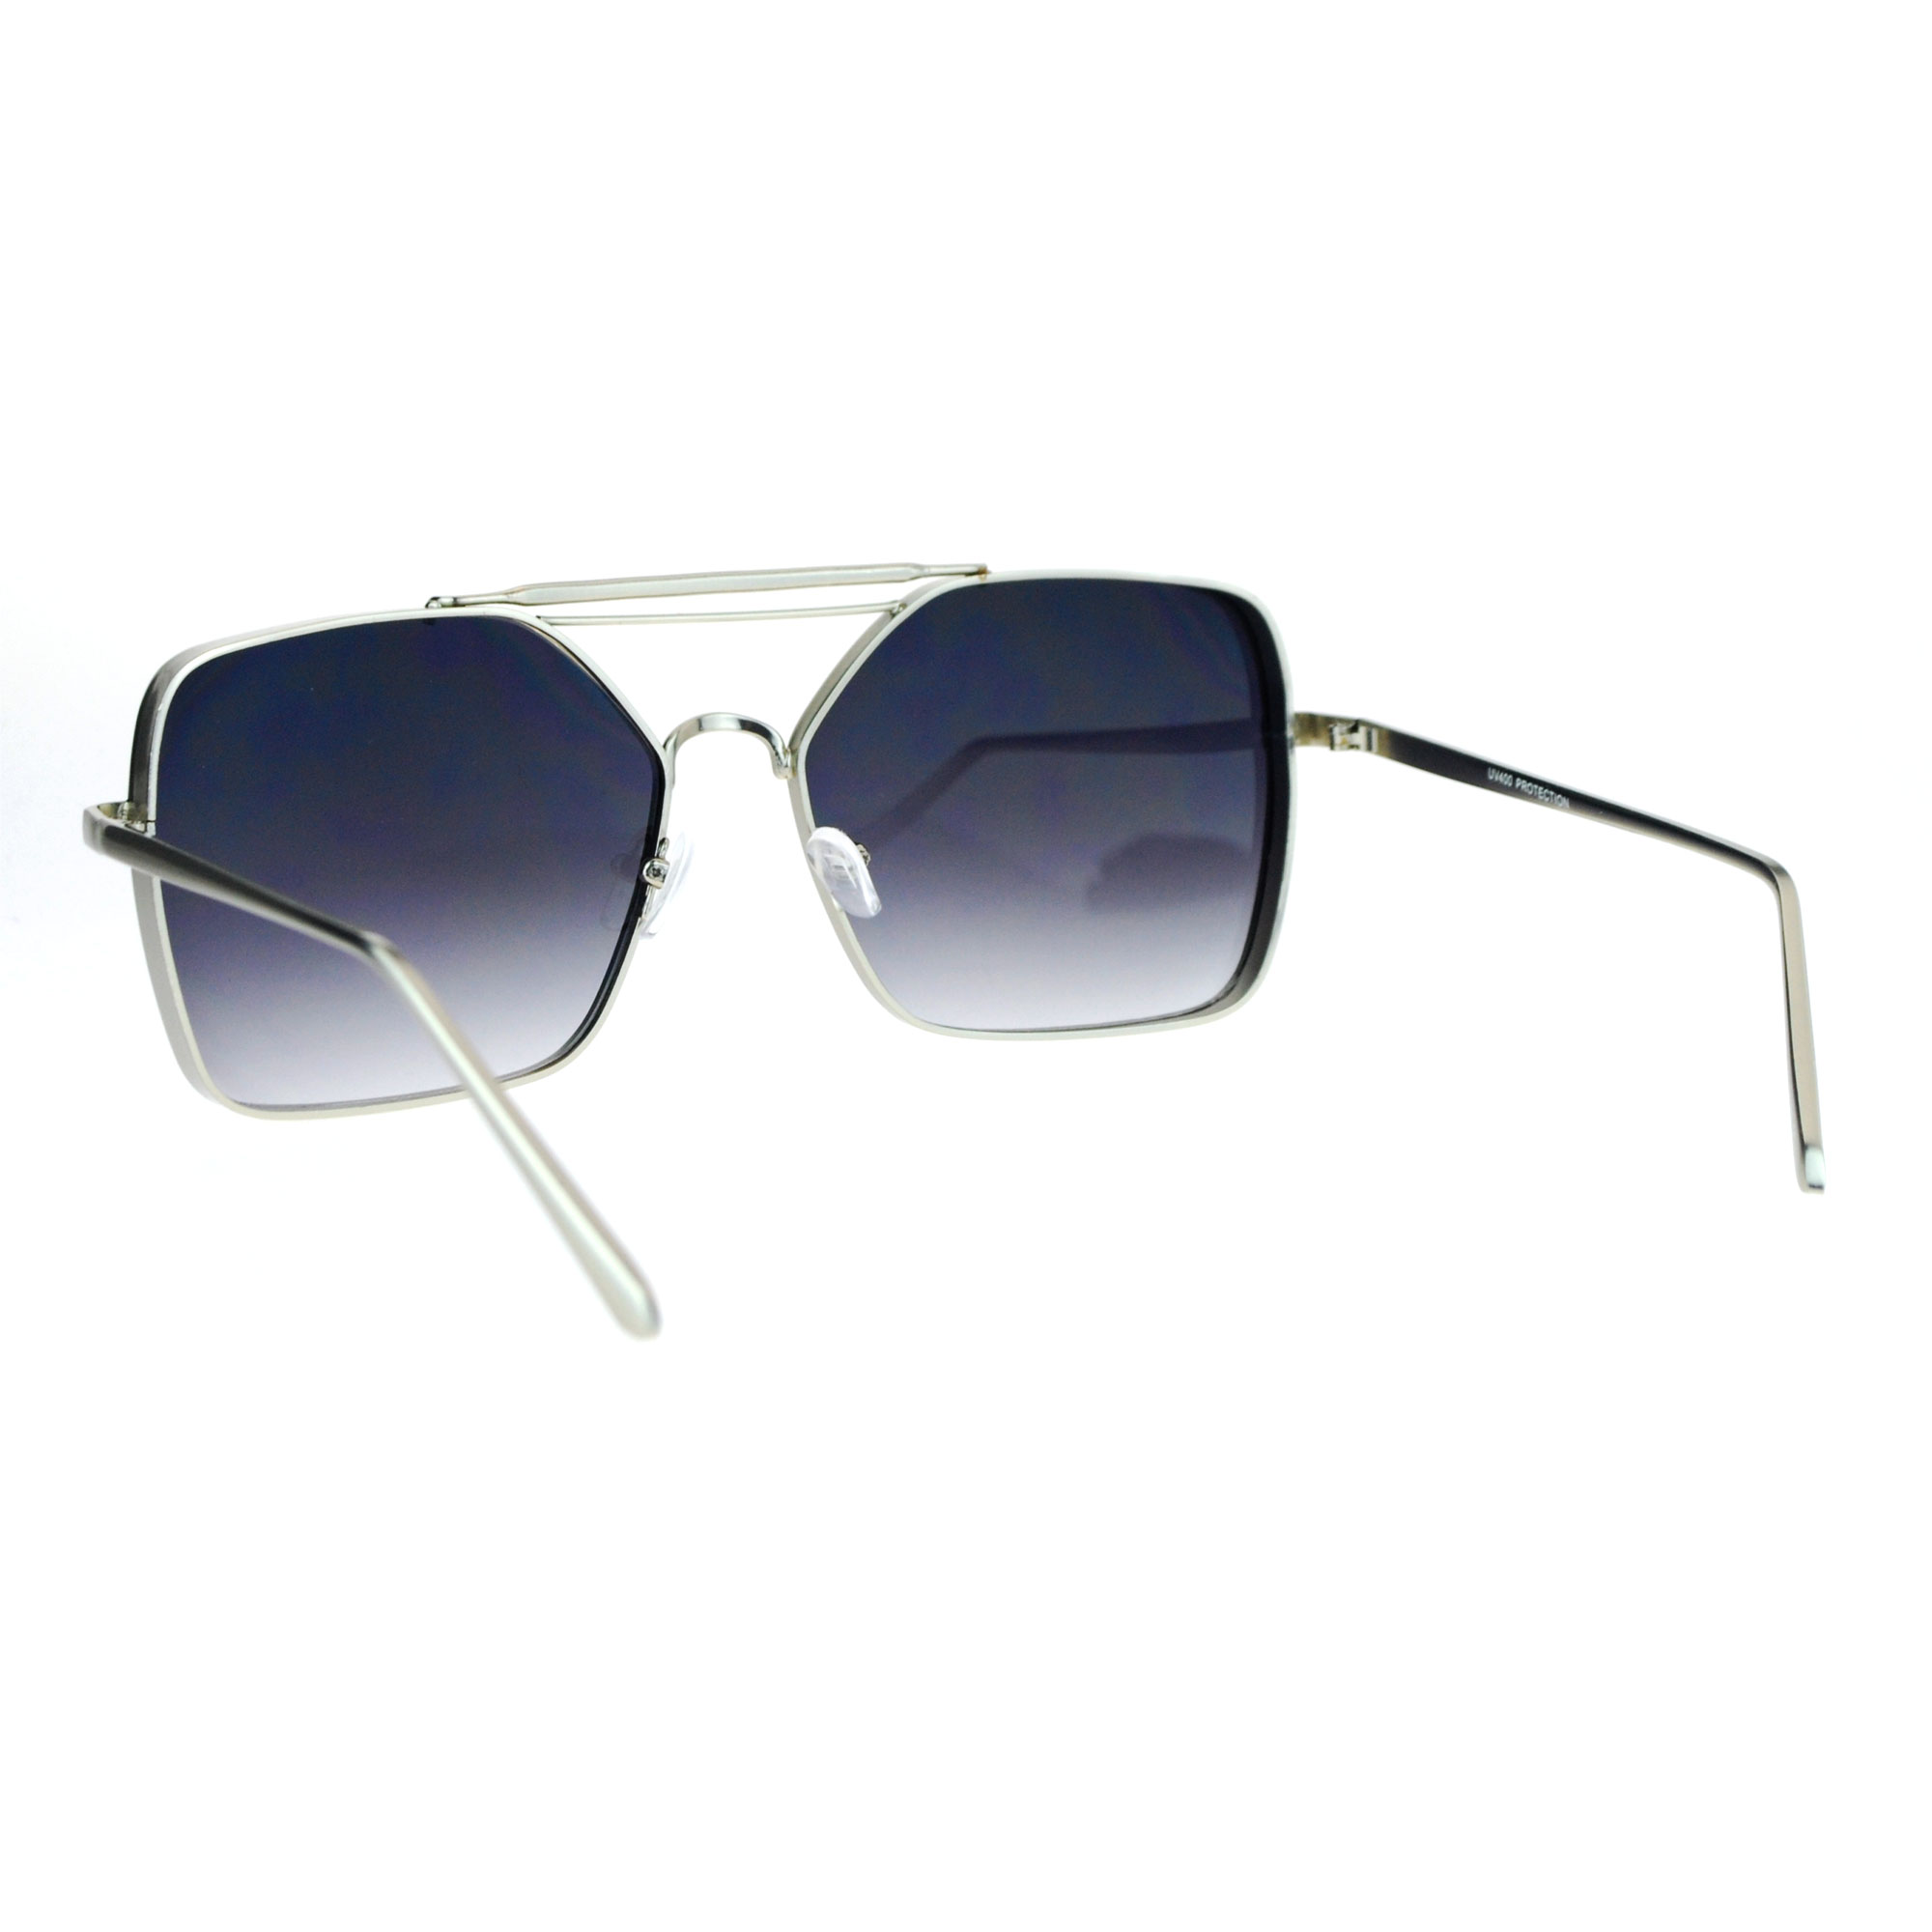 Mens Style Thick Metal Rectangular Double Bridge Sunglasses | eBay